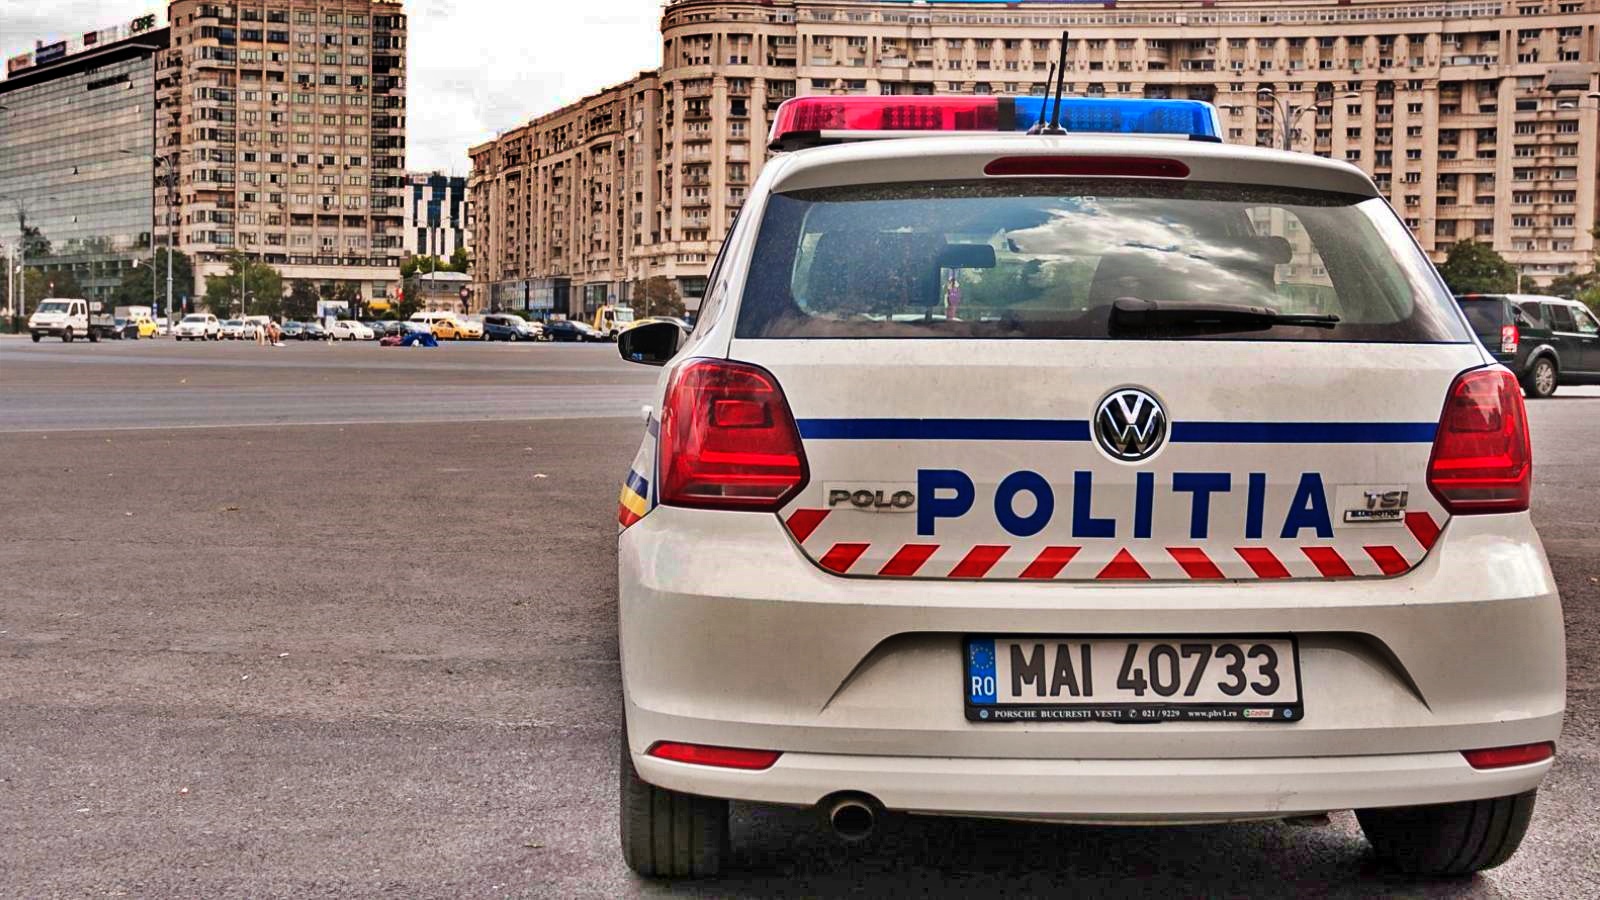 Politia Romana Campania Oficiala pentru Siguranta Scolara in Romania!